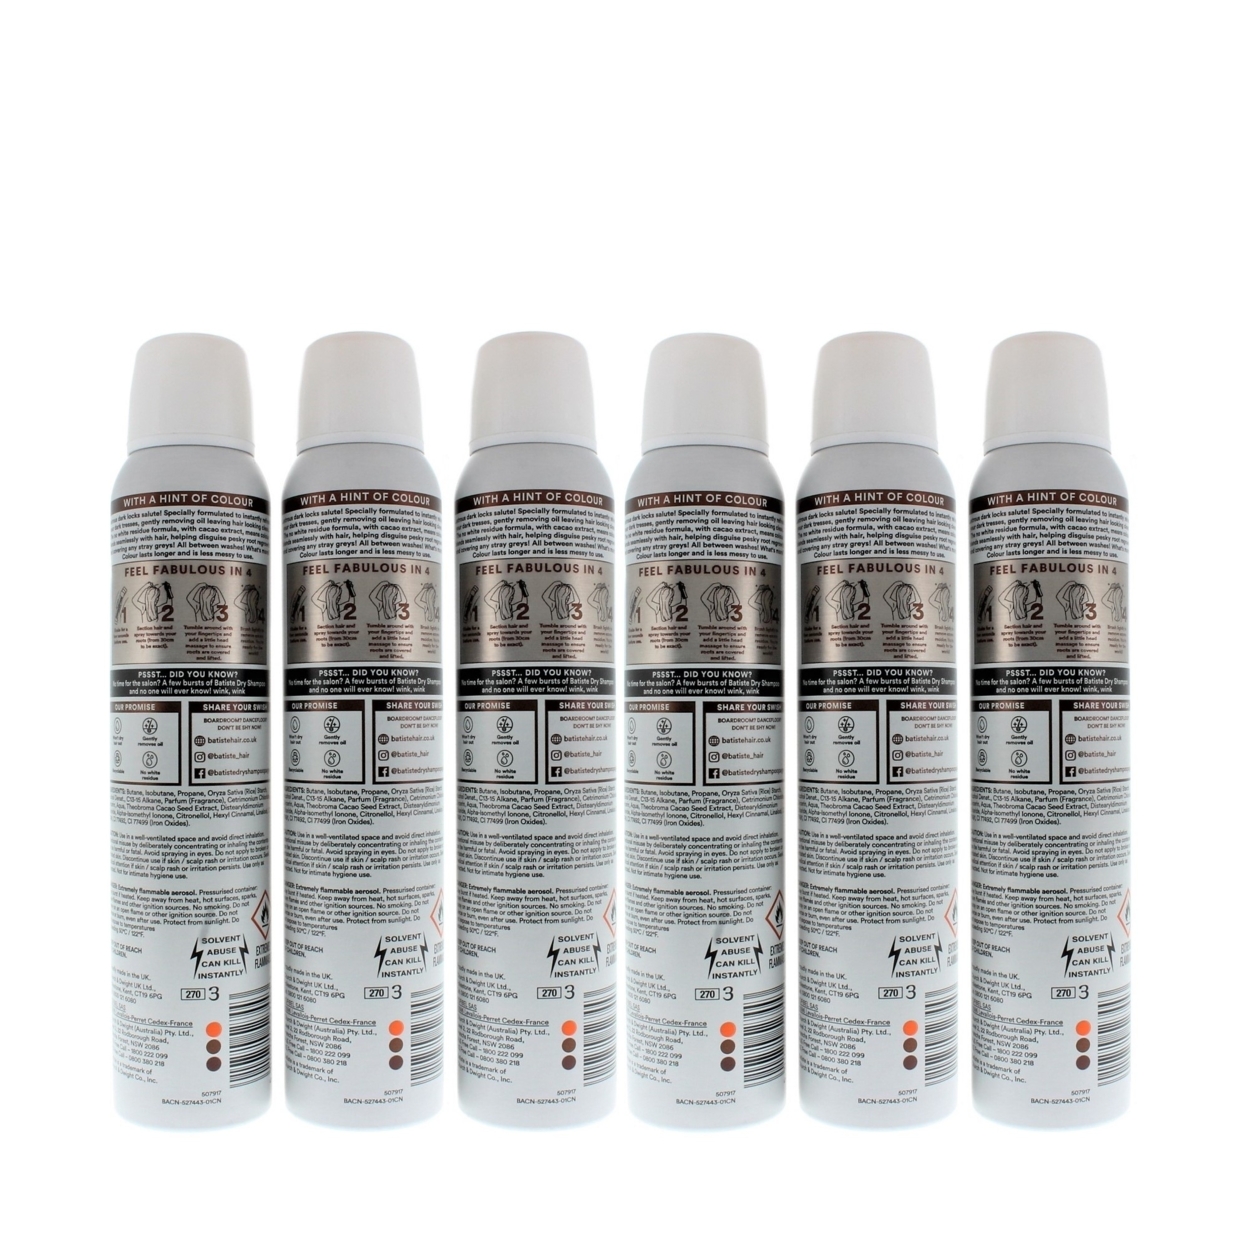 Batiste Instant Hair Refresh Colour Dry Shampoo Dark Hair 200ml/120g (6 PACK)